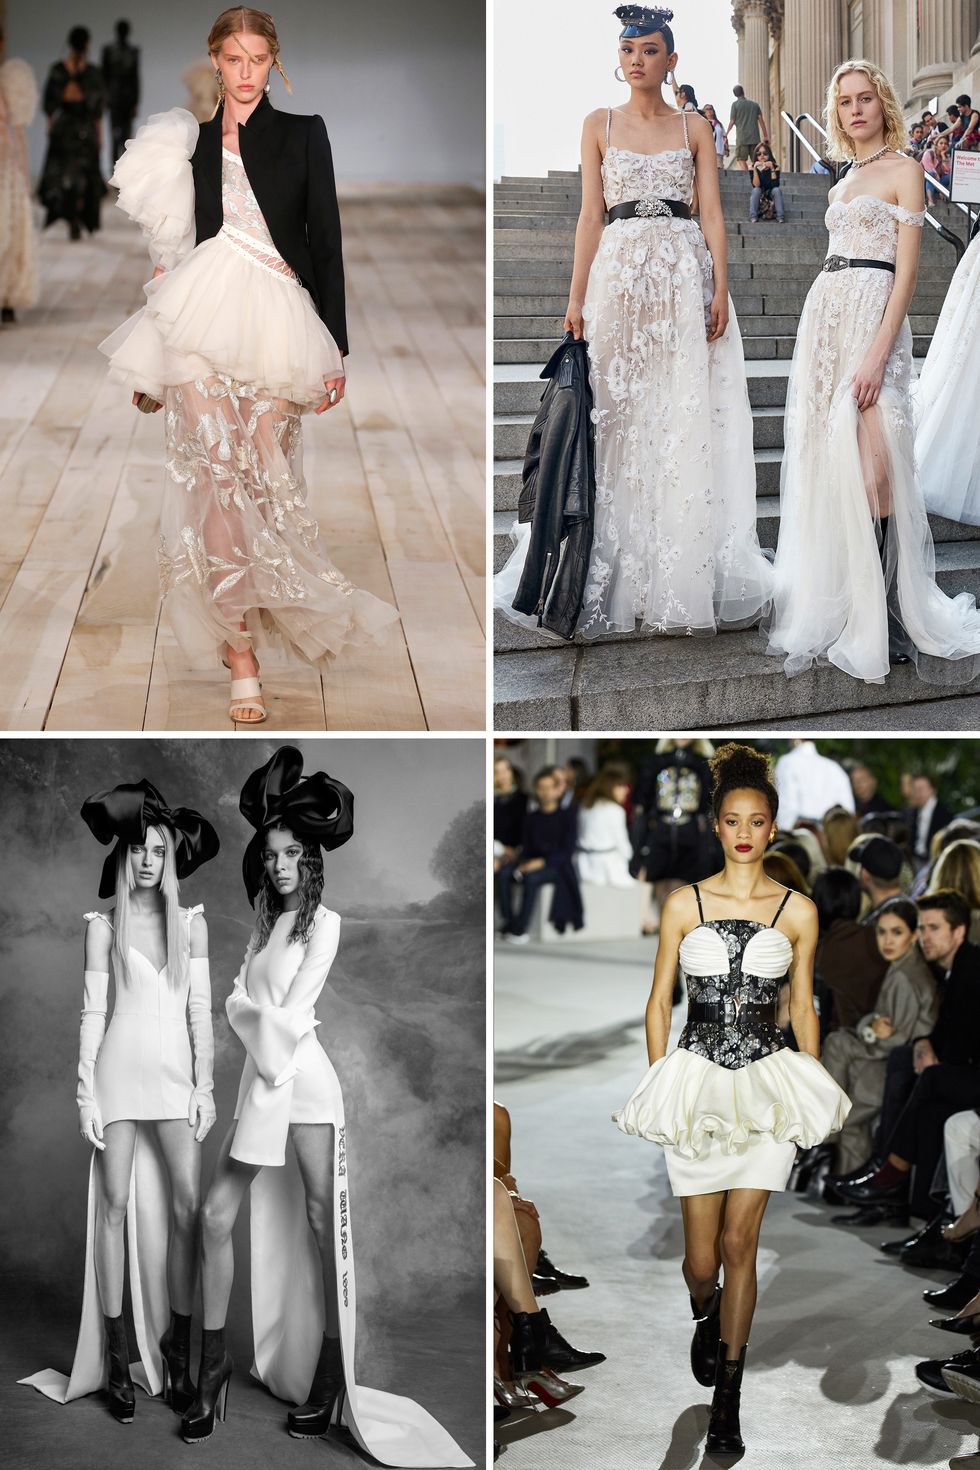 The 20 Wedding Dress Trends of 2020 - Best Wedding Dress Trends